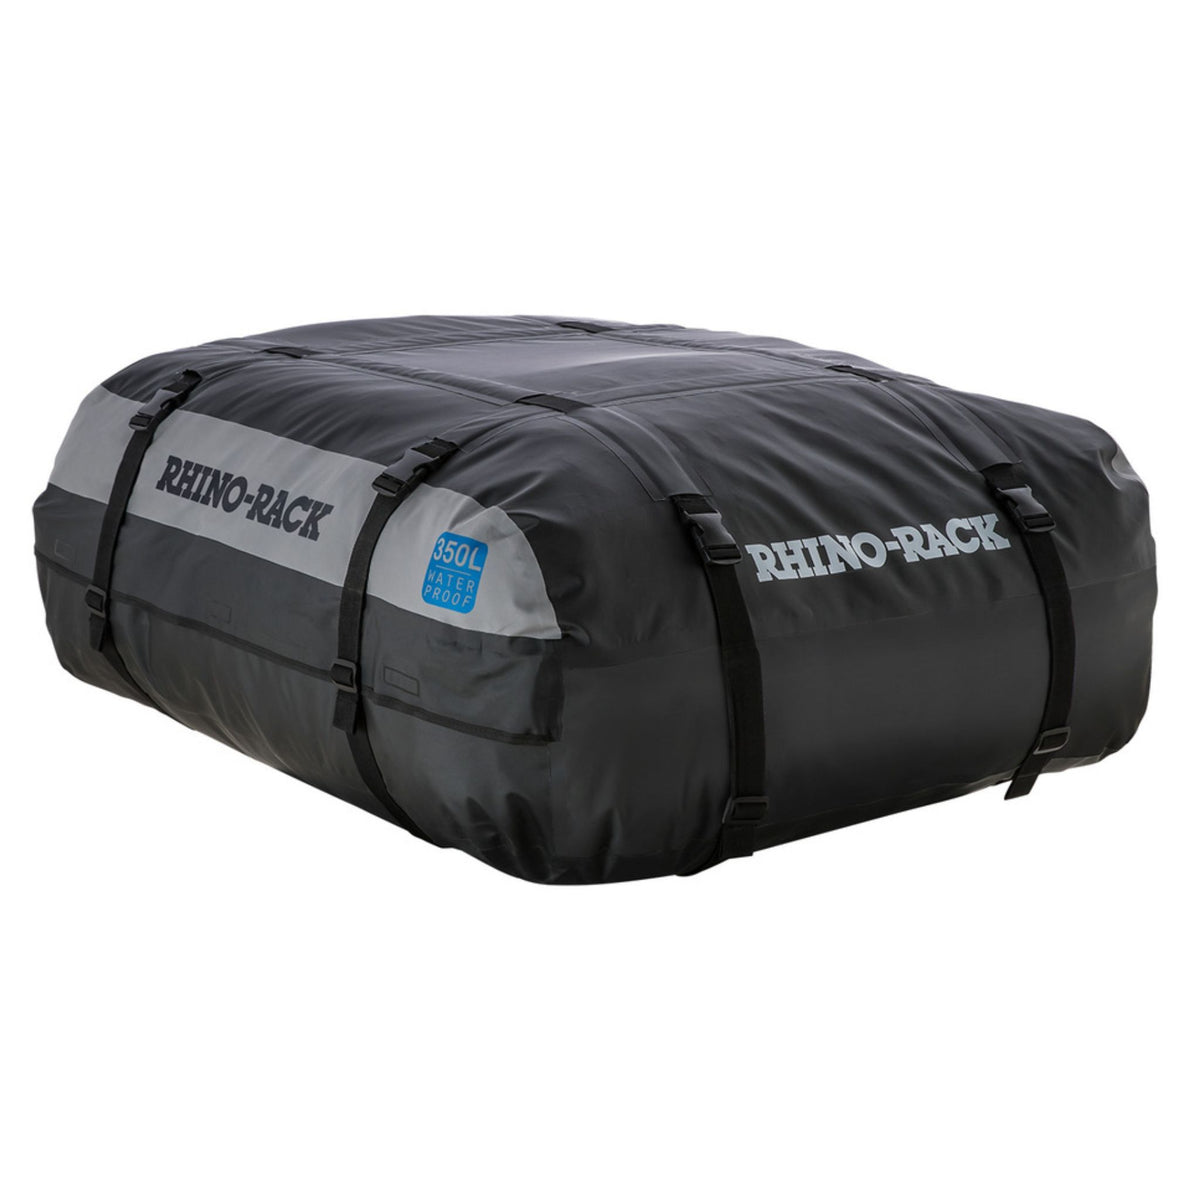 Rhino-Rack Weatherproof Luggage Bag - 350 Liter - LB350